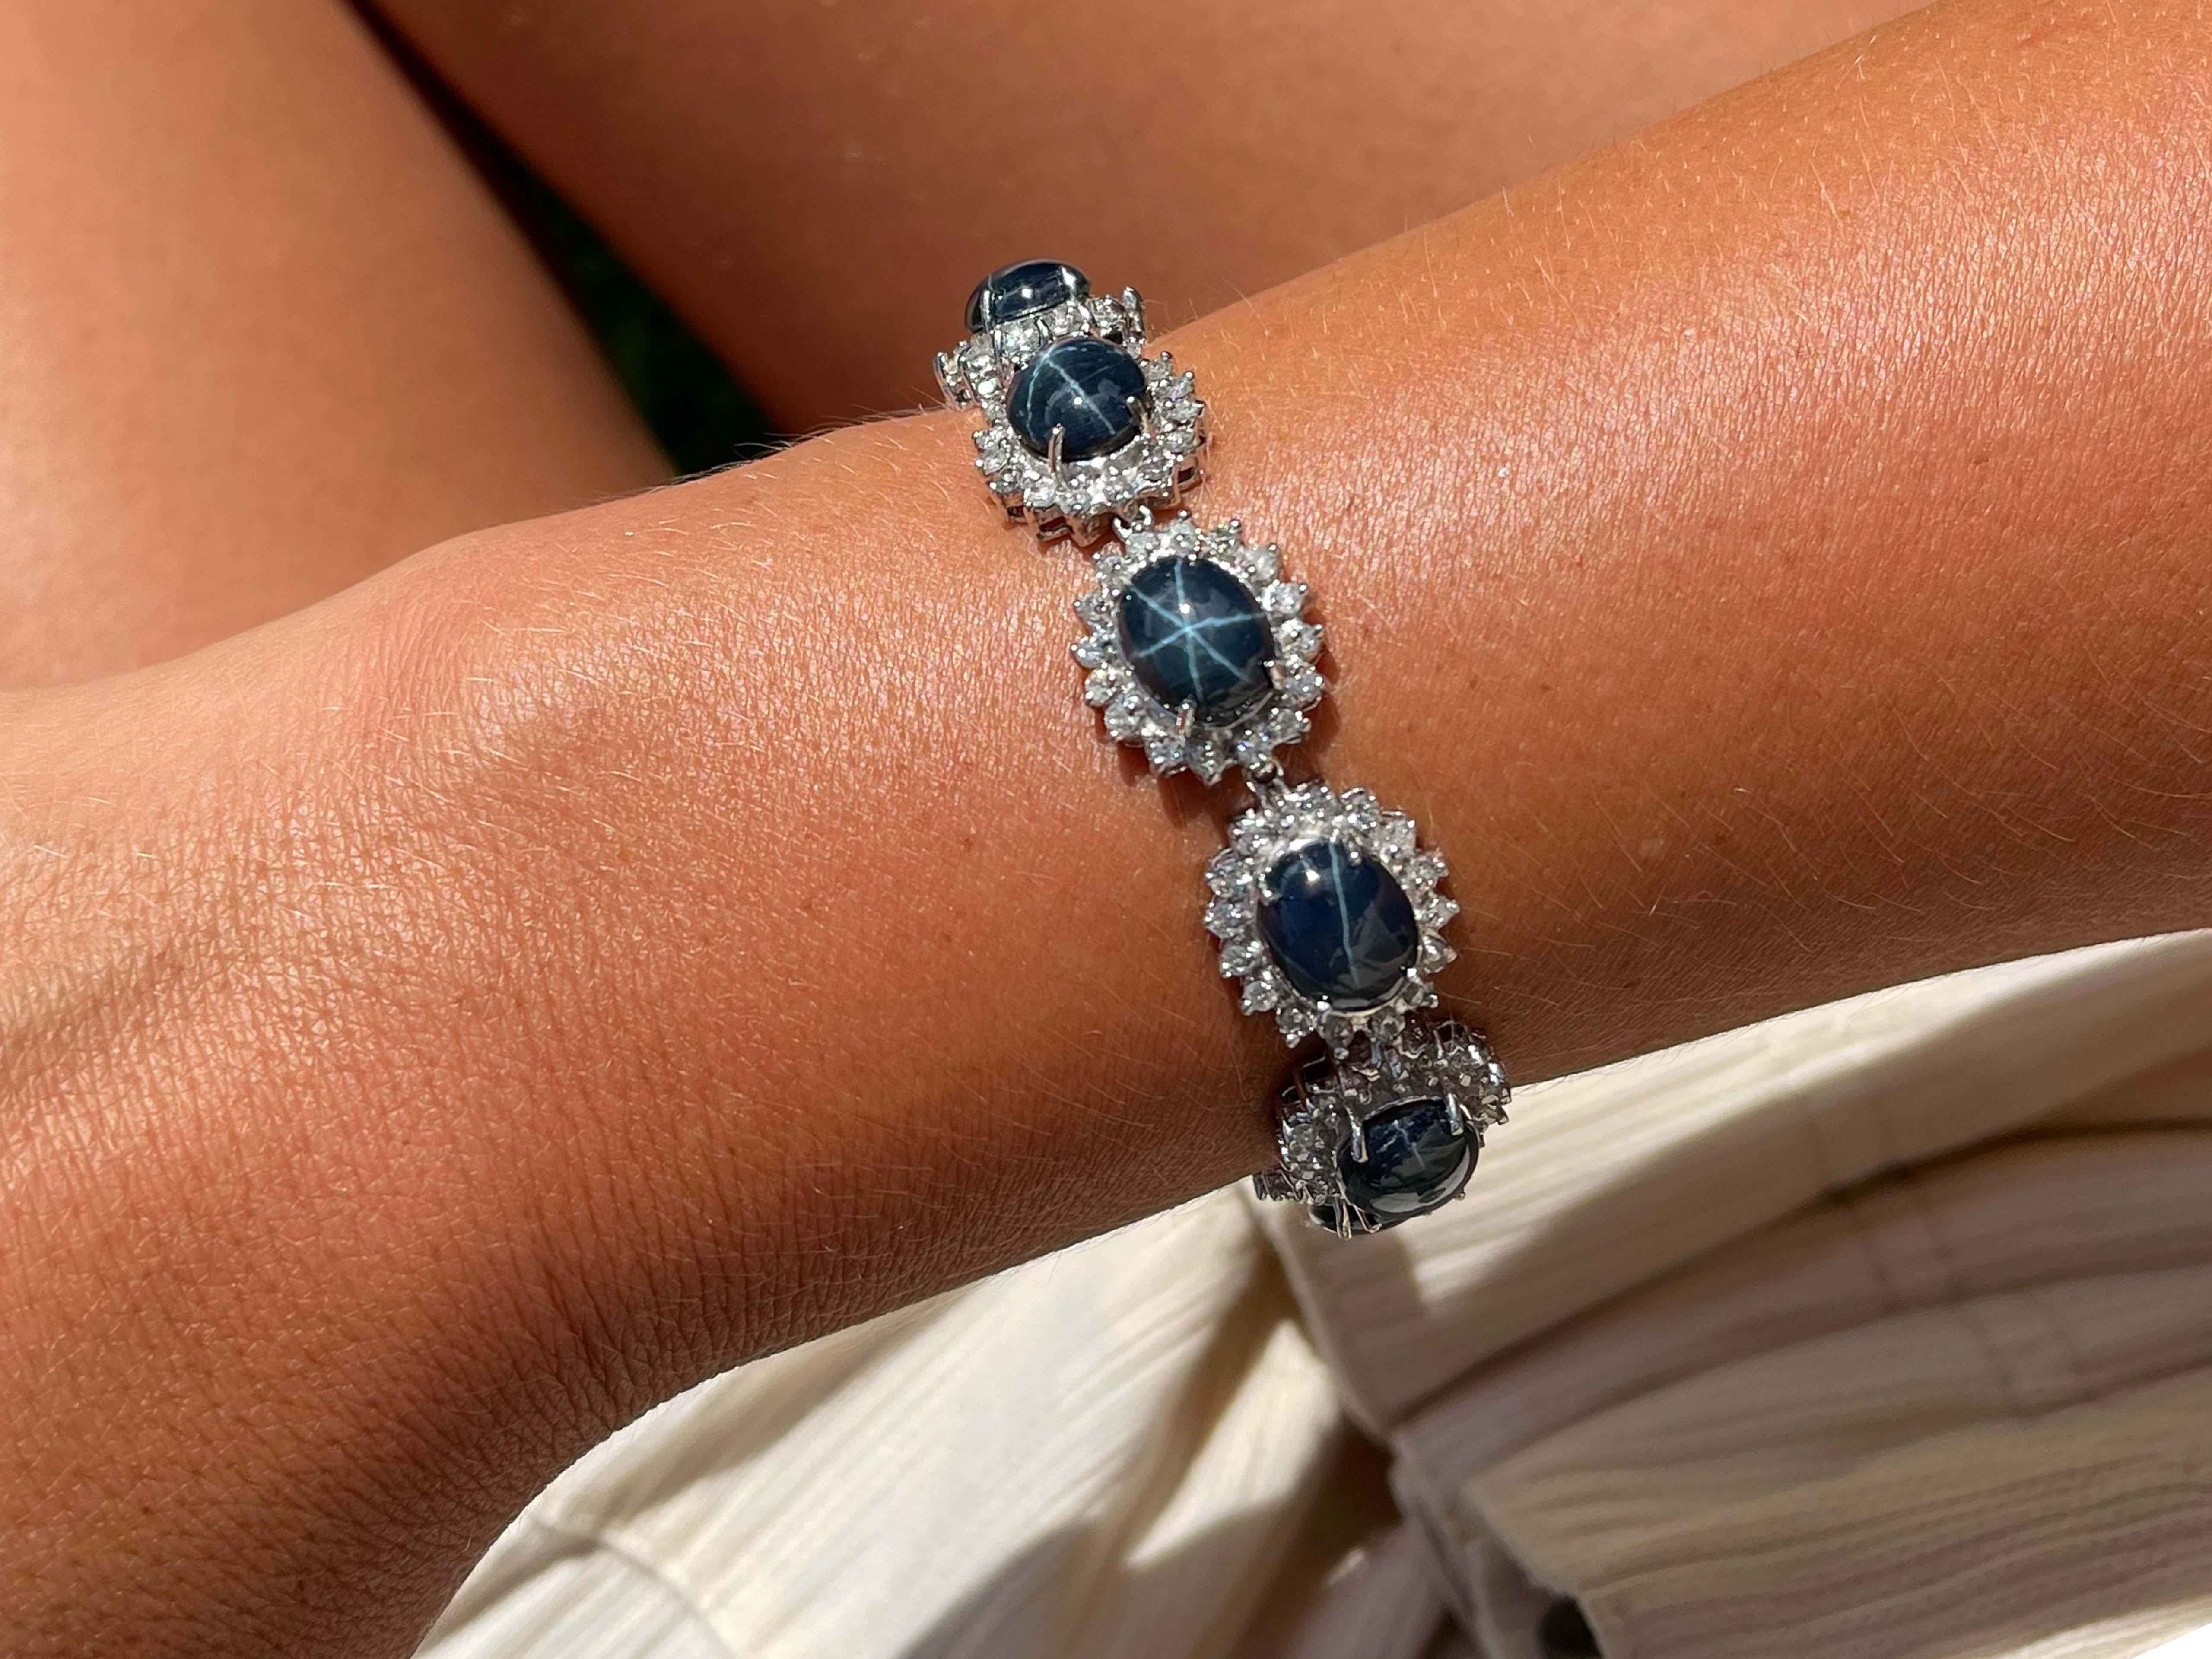 Bracelet Specifications:

Metal: 14k White Gold

Gemstones: blue star sapphires 

Sapphire Carat Weight: 56.40 carats

Sapphire Count: 11

Diamond Count: 176

Diamond Carat Weight: 5.00

Diamond Color: F-G

Diamond Clarity: SI2-I1

Bracelet Length: